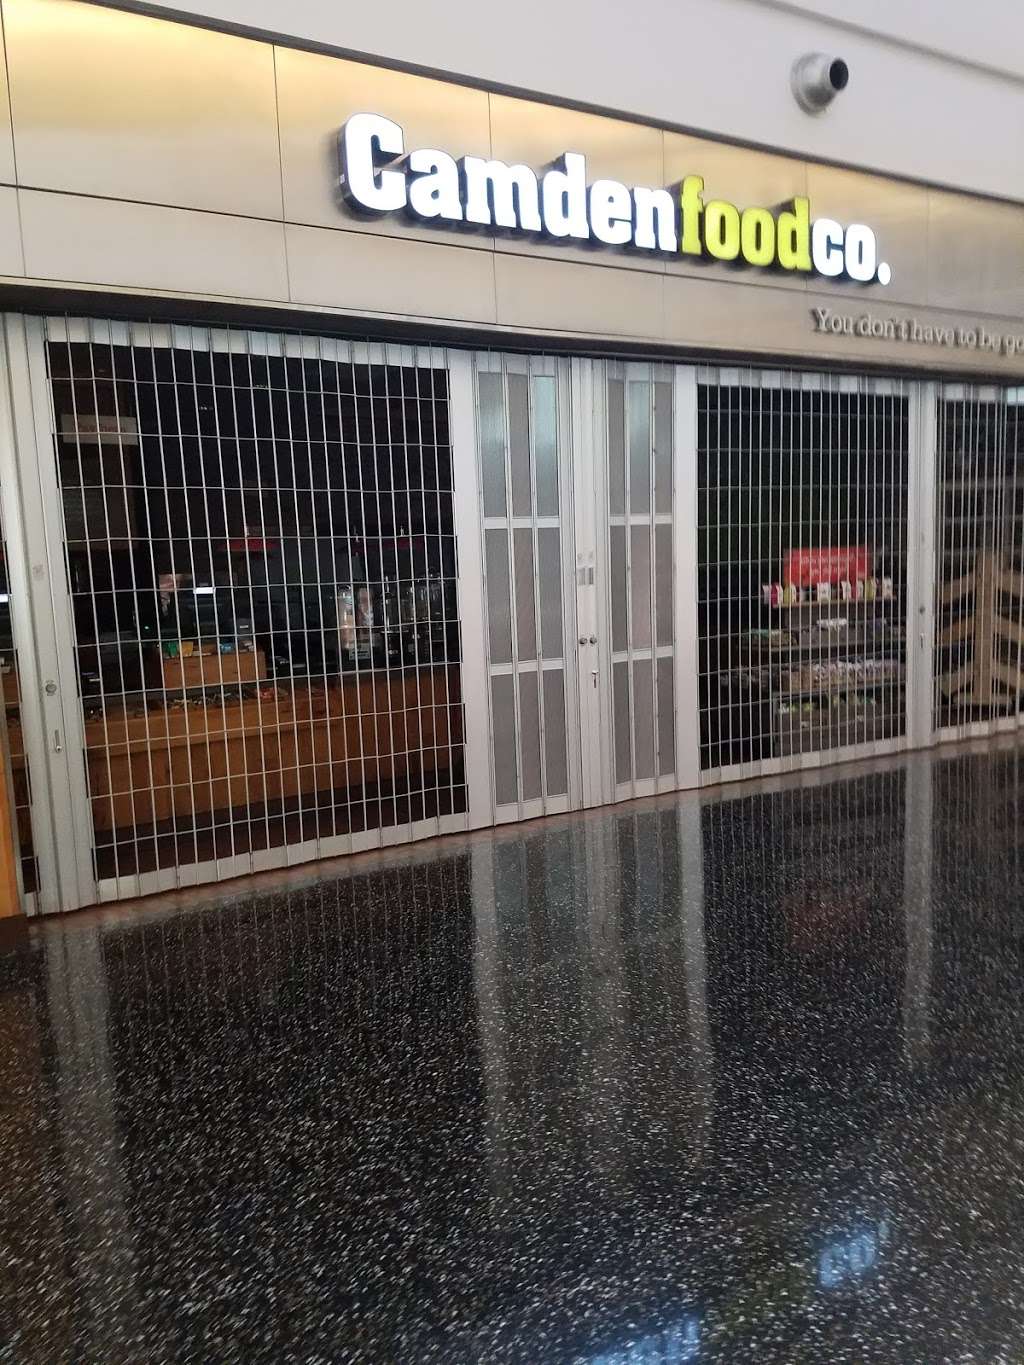 Camden Food Co. | 2, Terminal 2 West, 3225 N Harbor Dr, San Diego, CA 92101